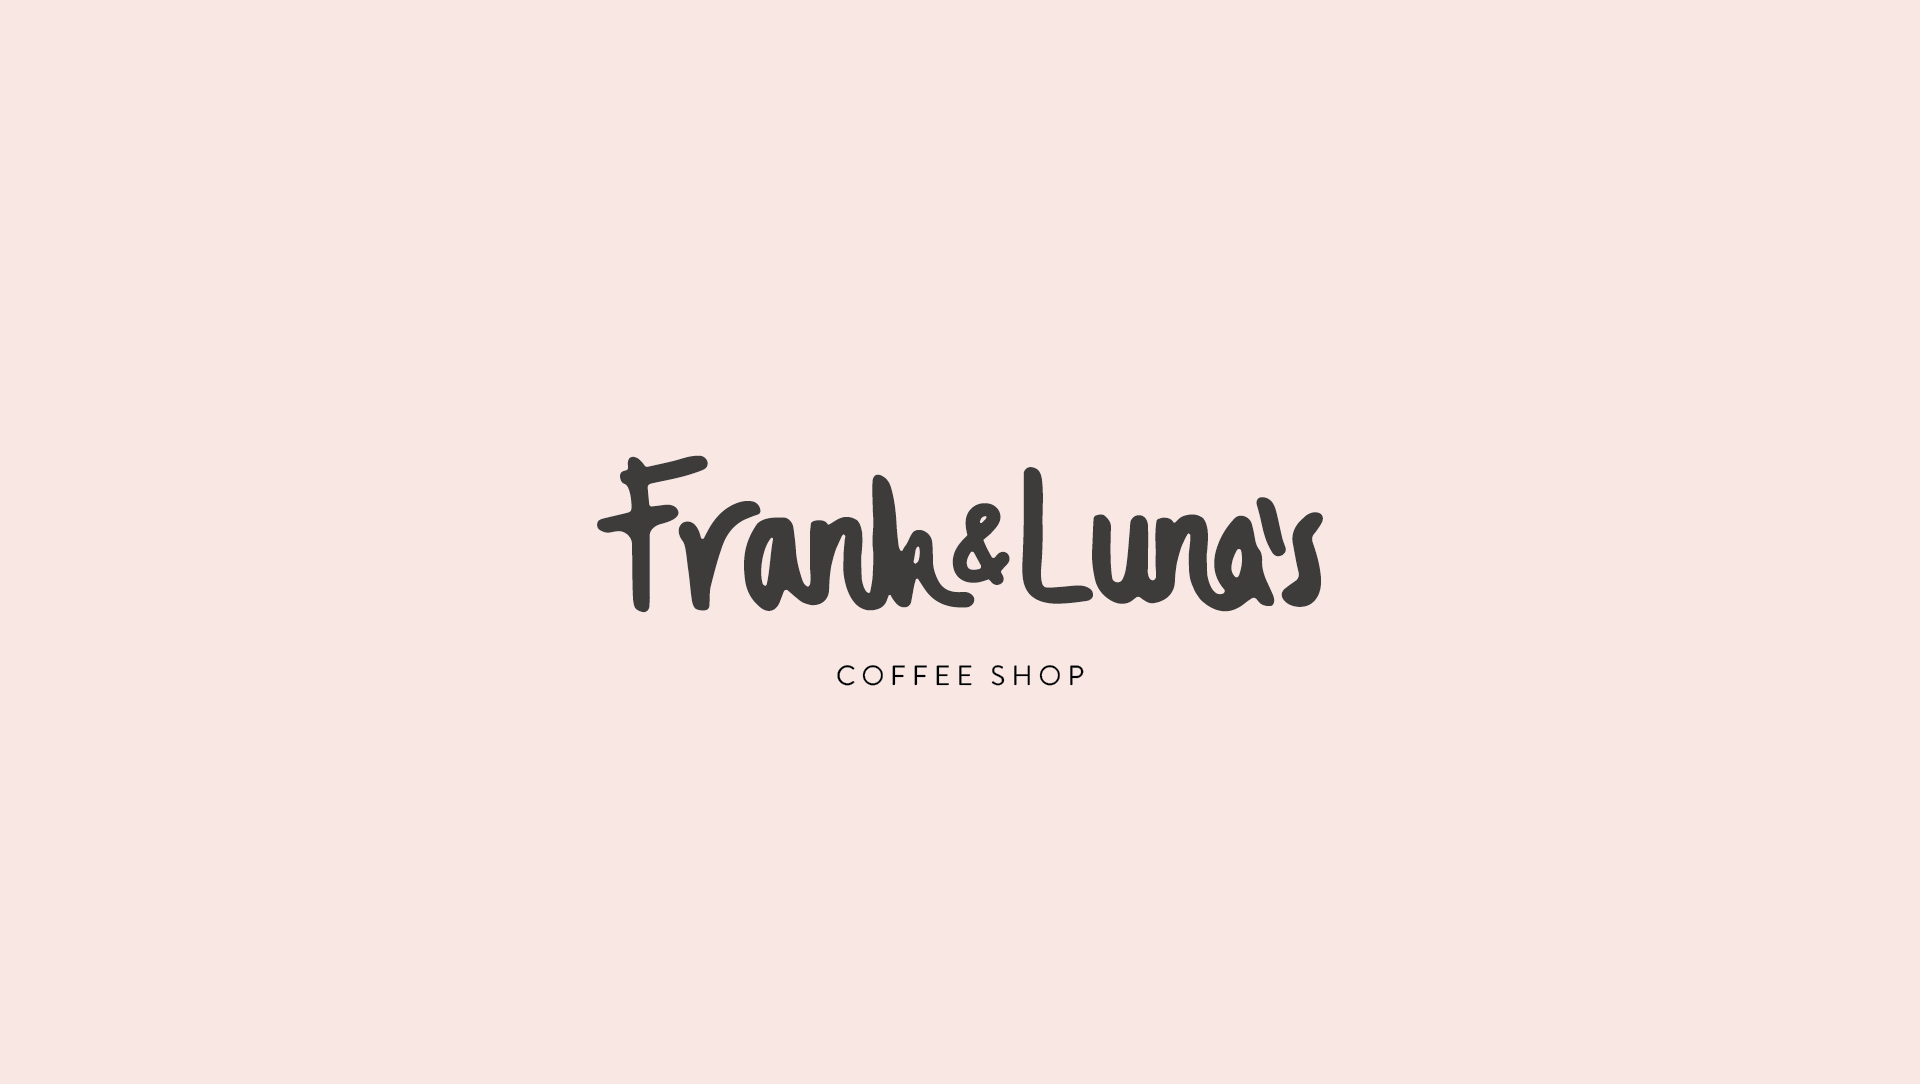 Frank & Luna’s - Brand Identity